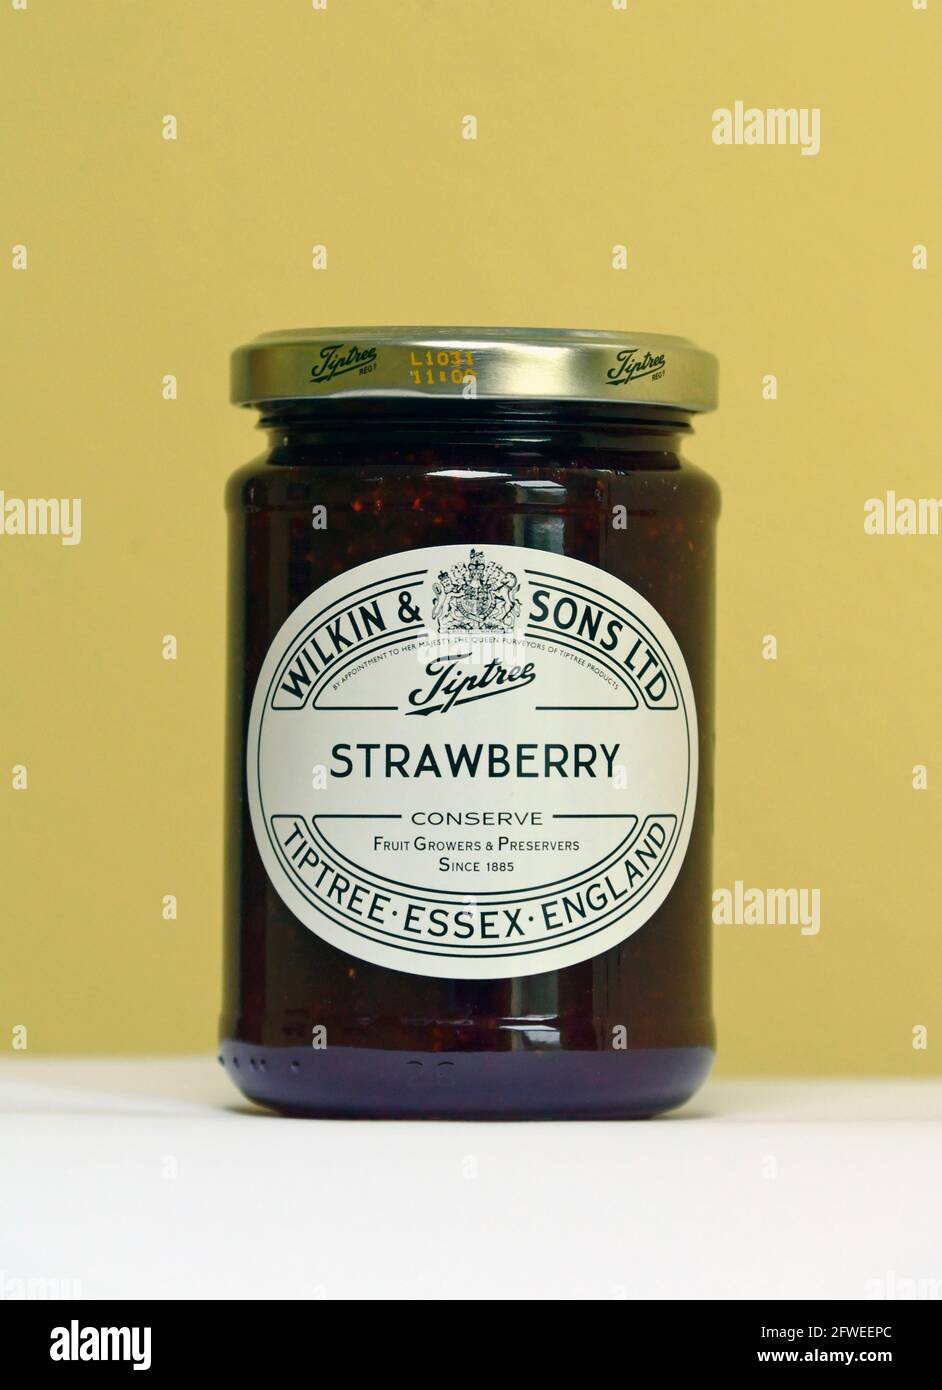 Jar of Tiptree Strawberry Conserve. Wilkin & Sons Ltd. Tiptree, Essex, England. Fruit Growers & Preservers Since 1885. Stock Photo